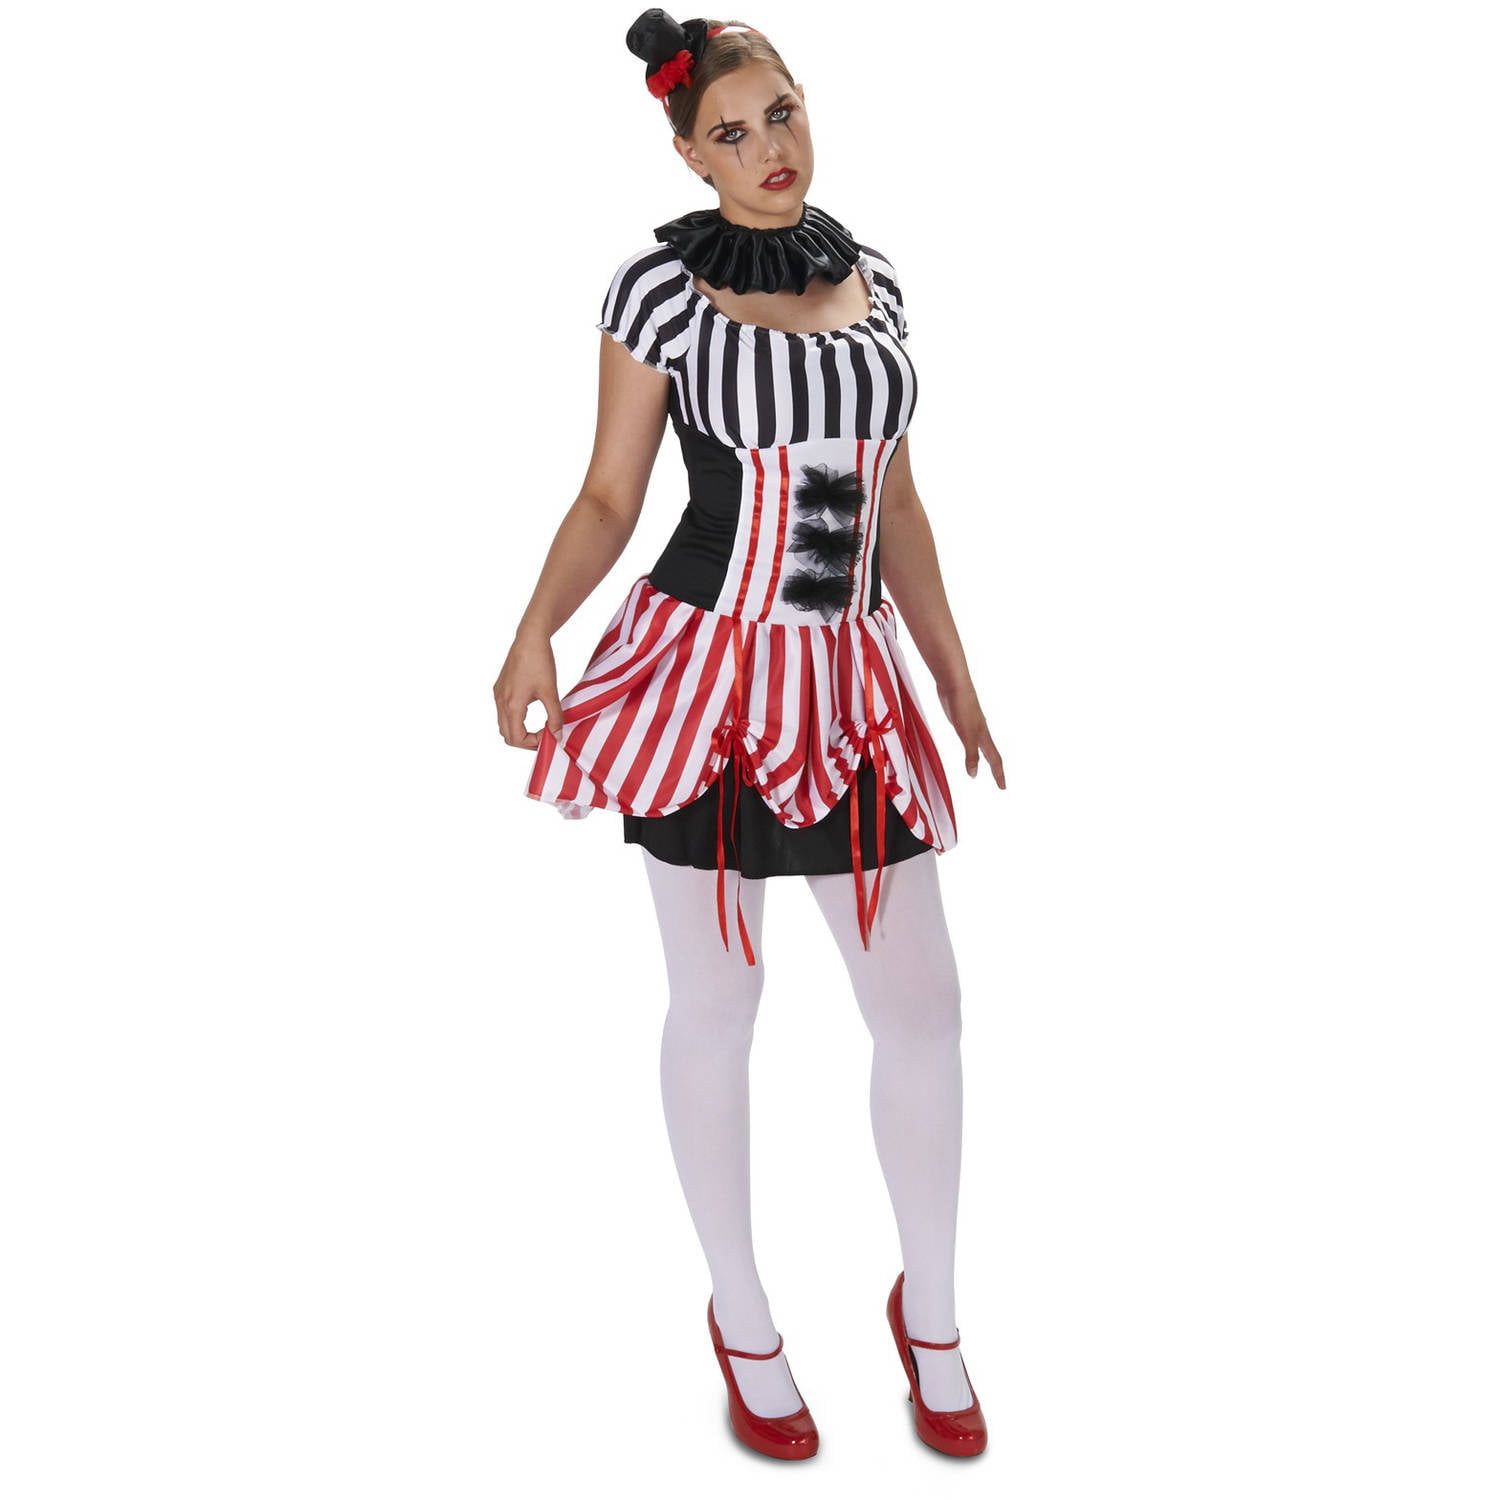 Carn-Evil Vintage Striped Dress Women's Adult Halloween Costume ...